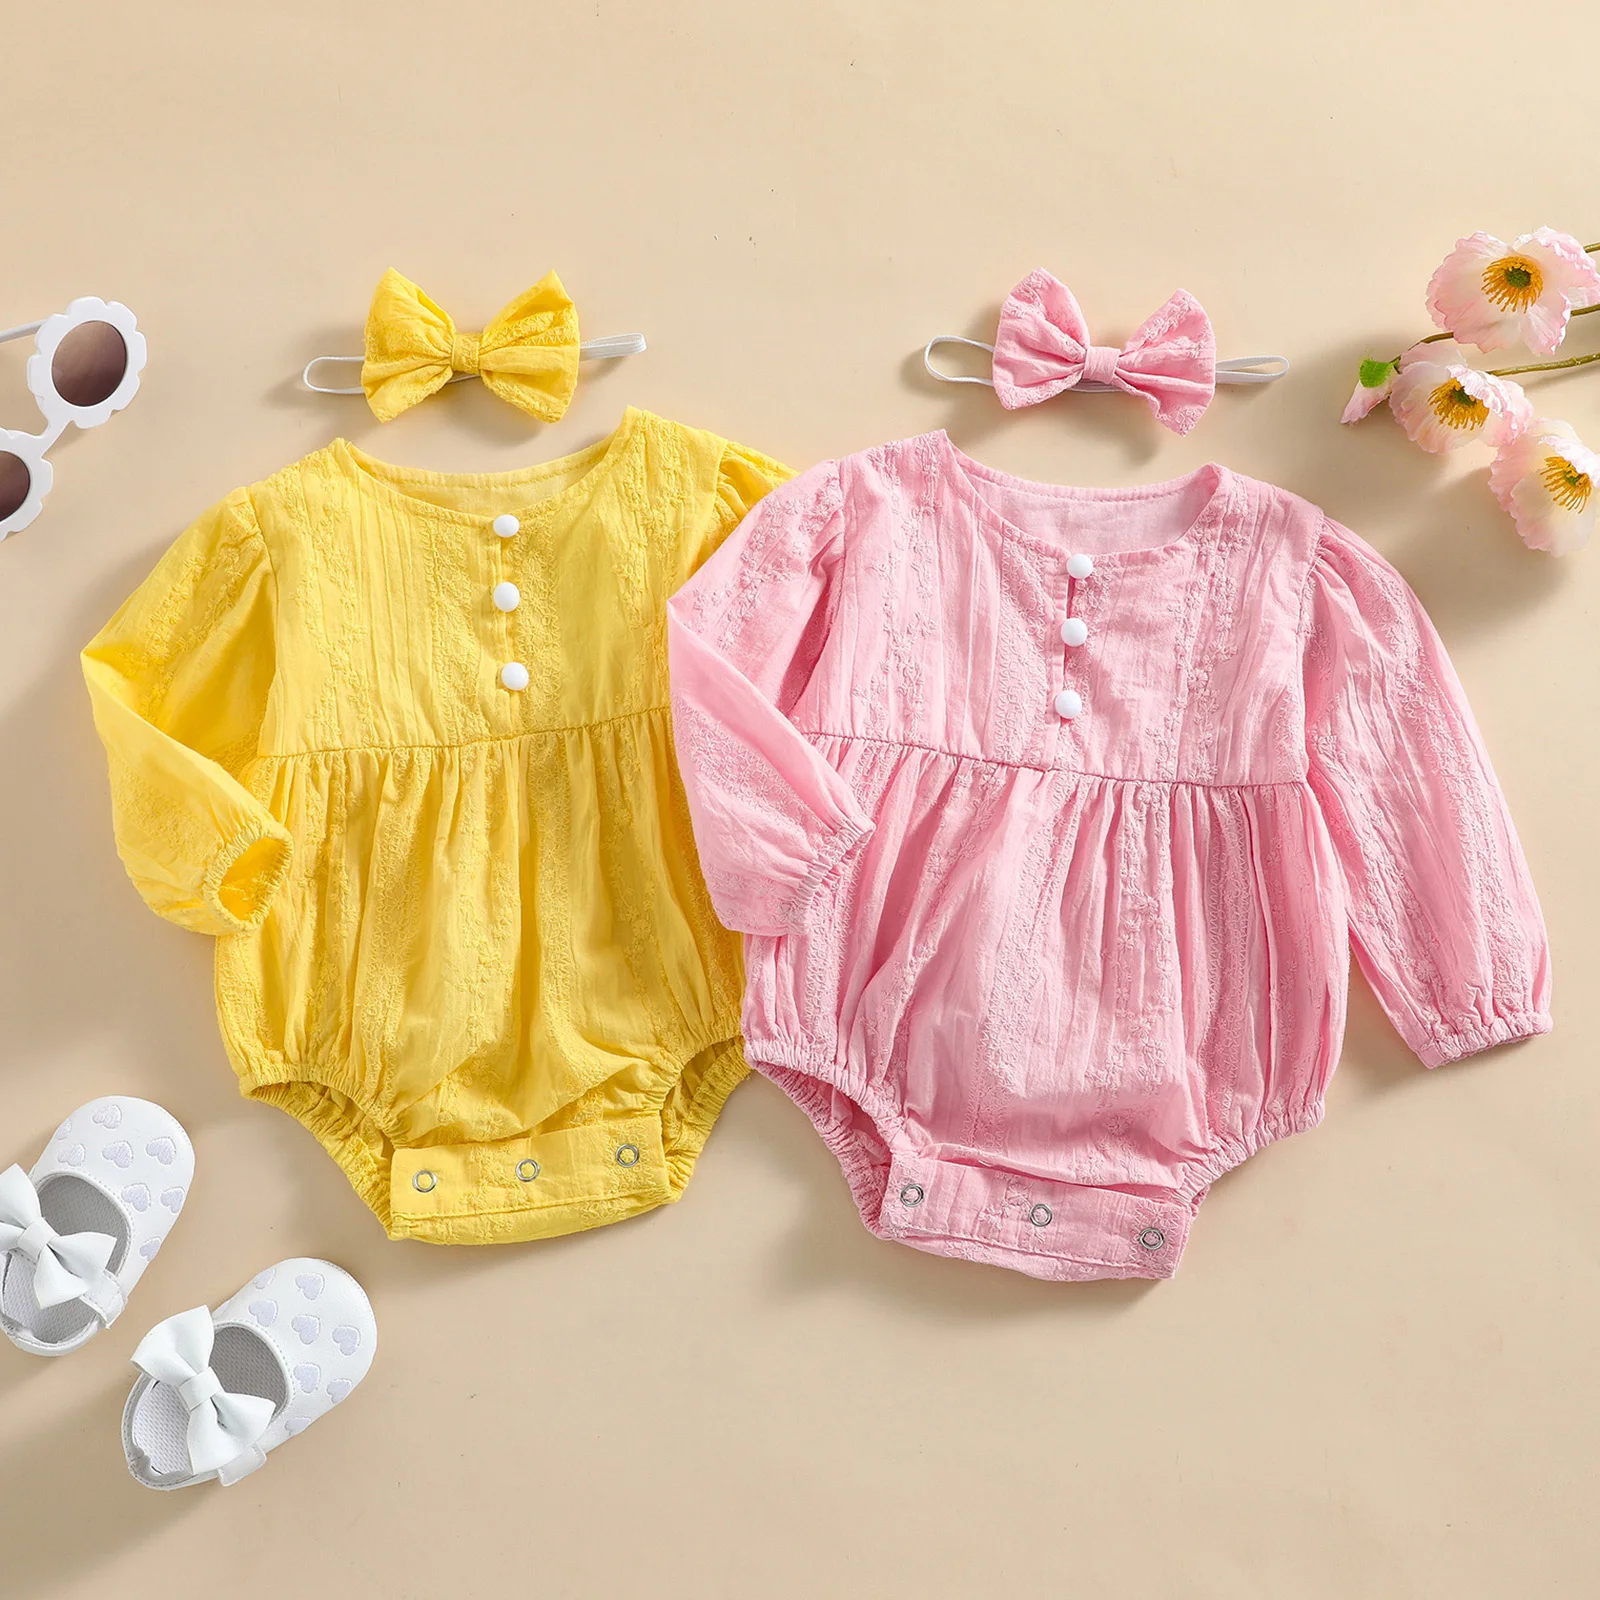 

Pudcoco 0-18M 3Pcs Girls Newborn Infant Kids Lace Yellow Pink Bodysuit+Bowknot Headdress Clothes Outfit